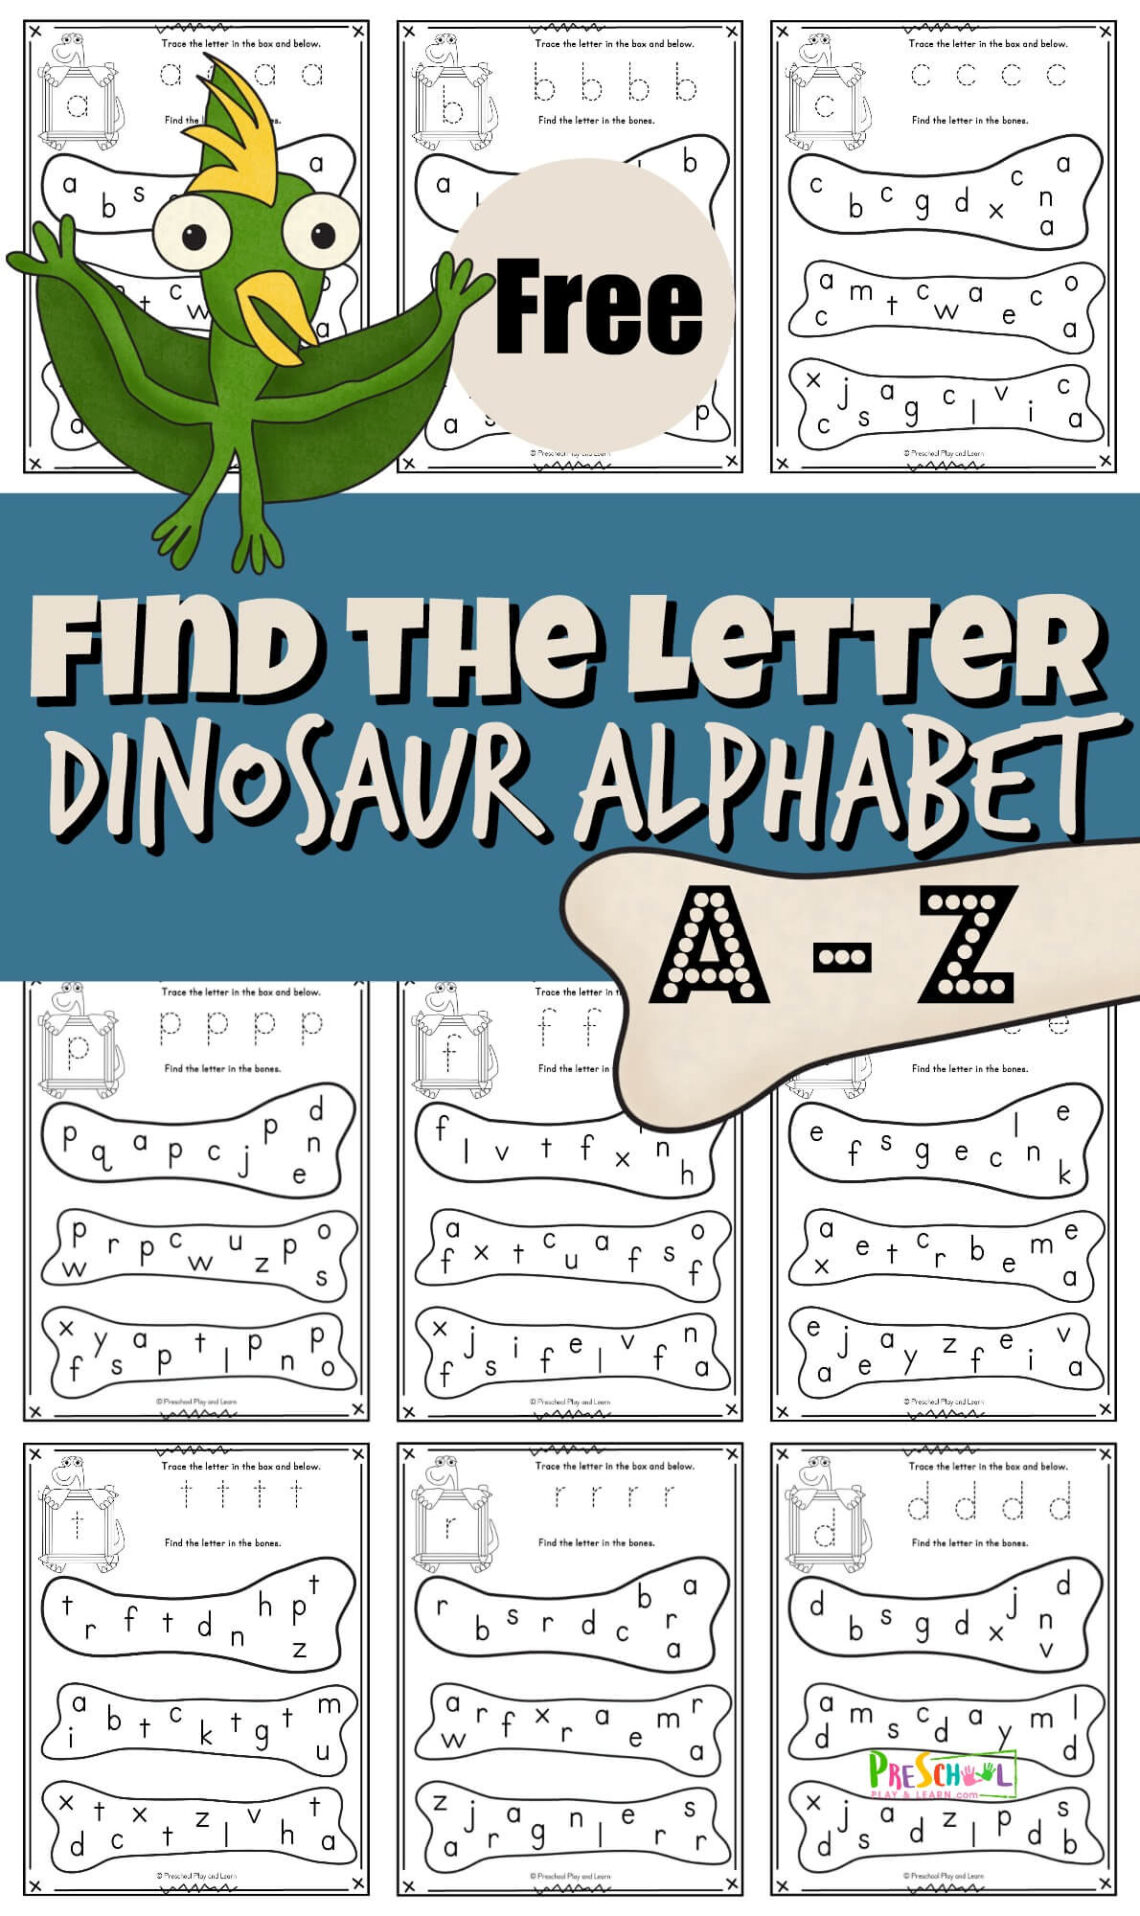 FREE FREE Printable Find The Letter Dinosaur Alphabet Worksheets